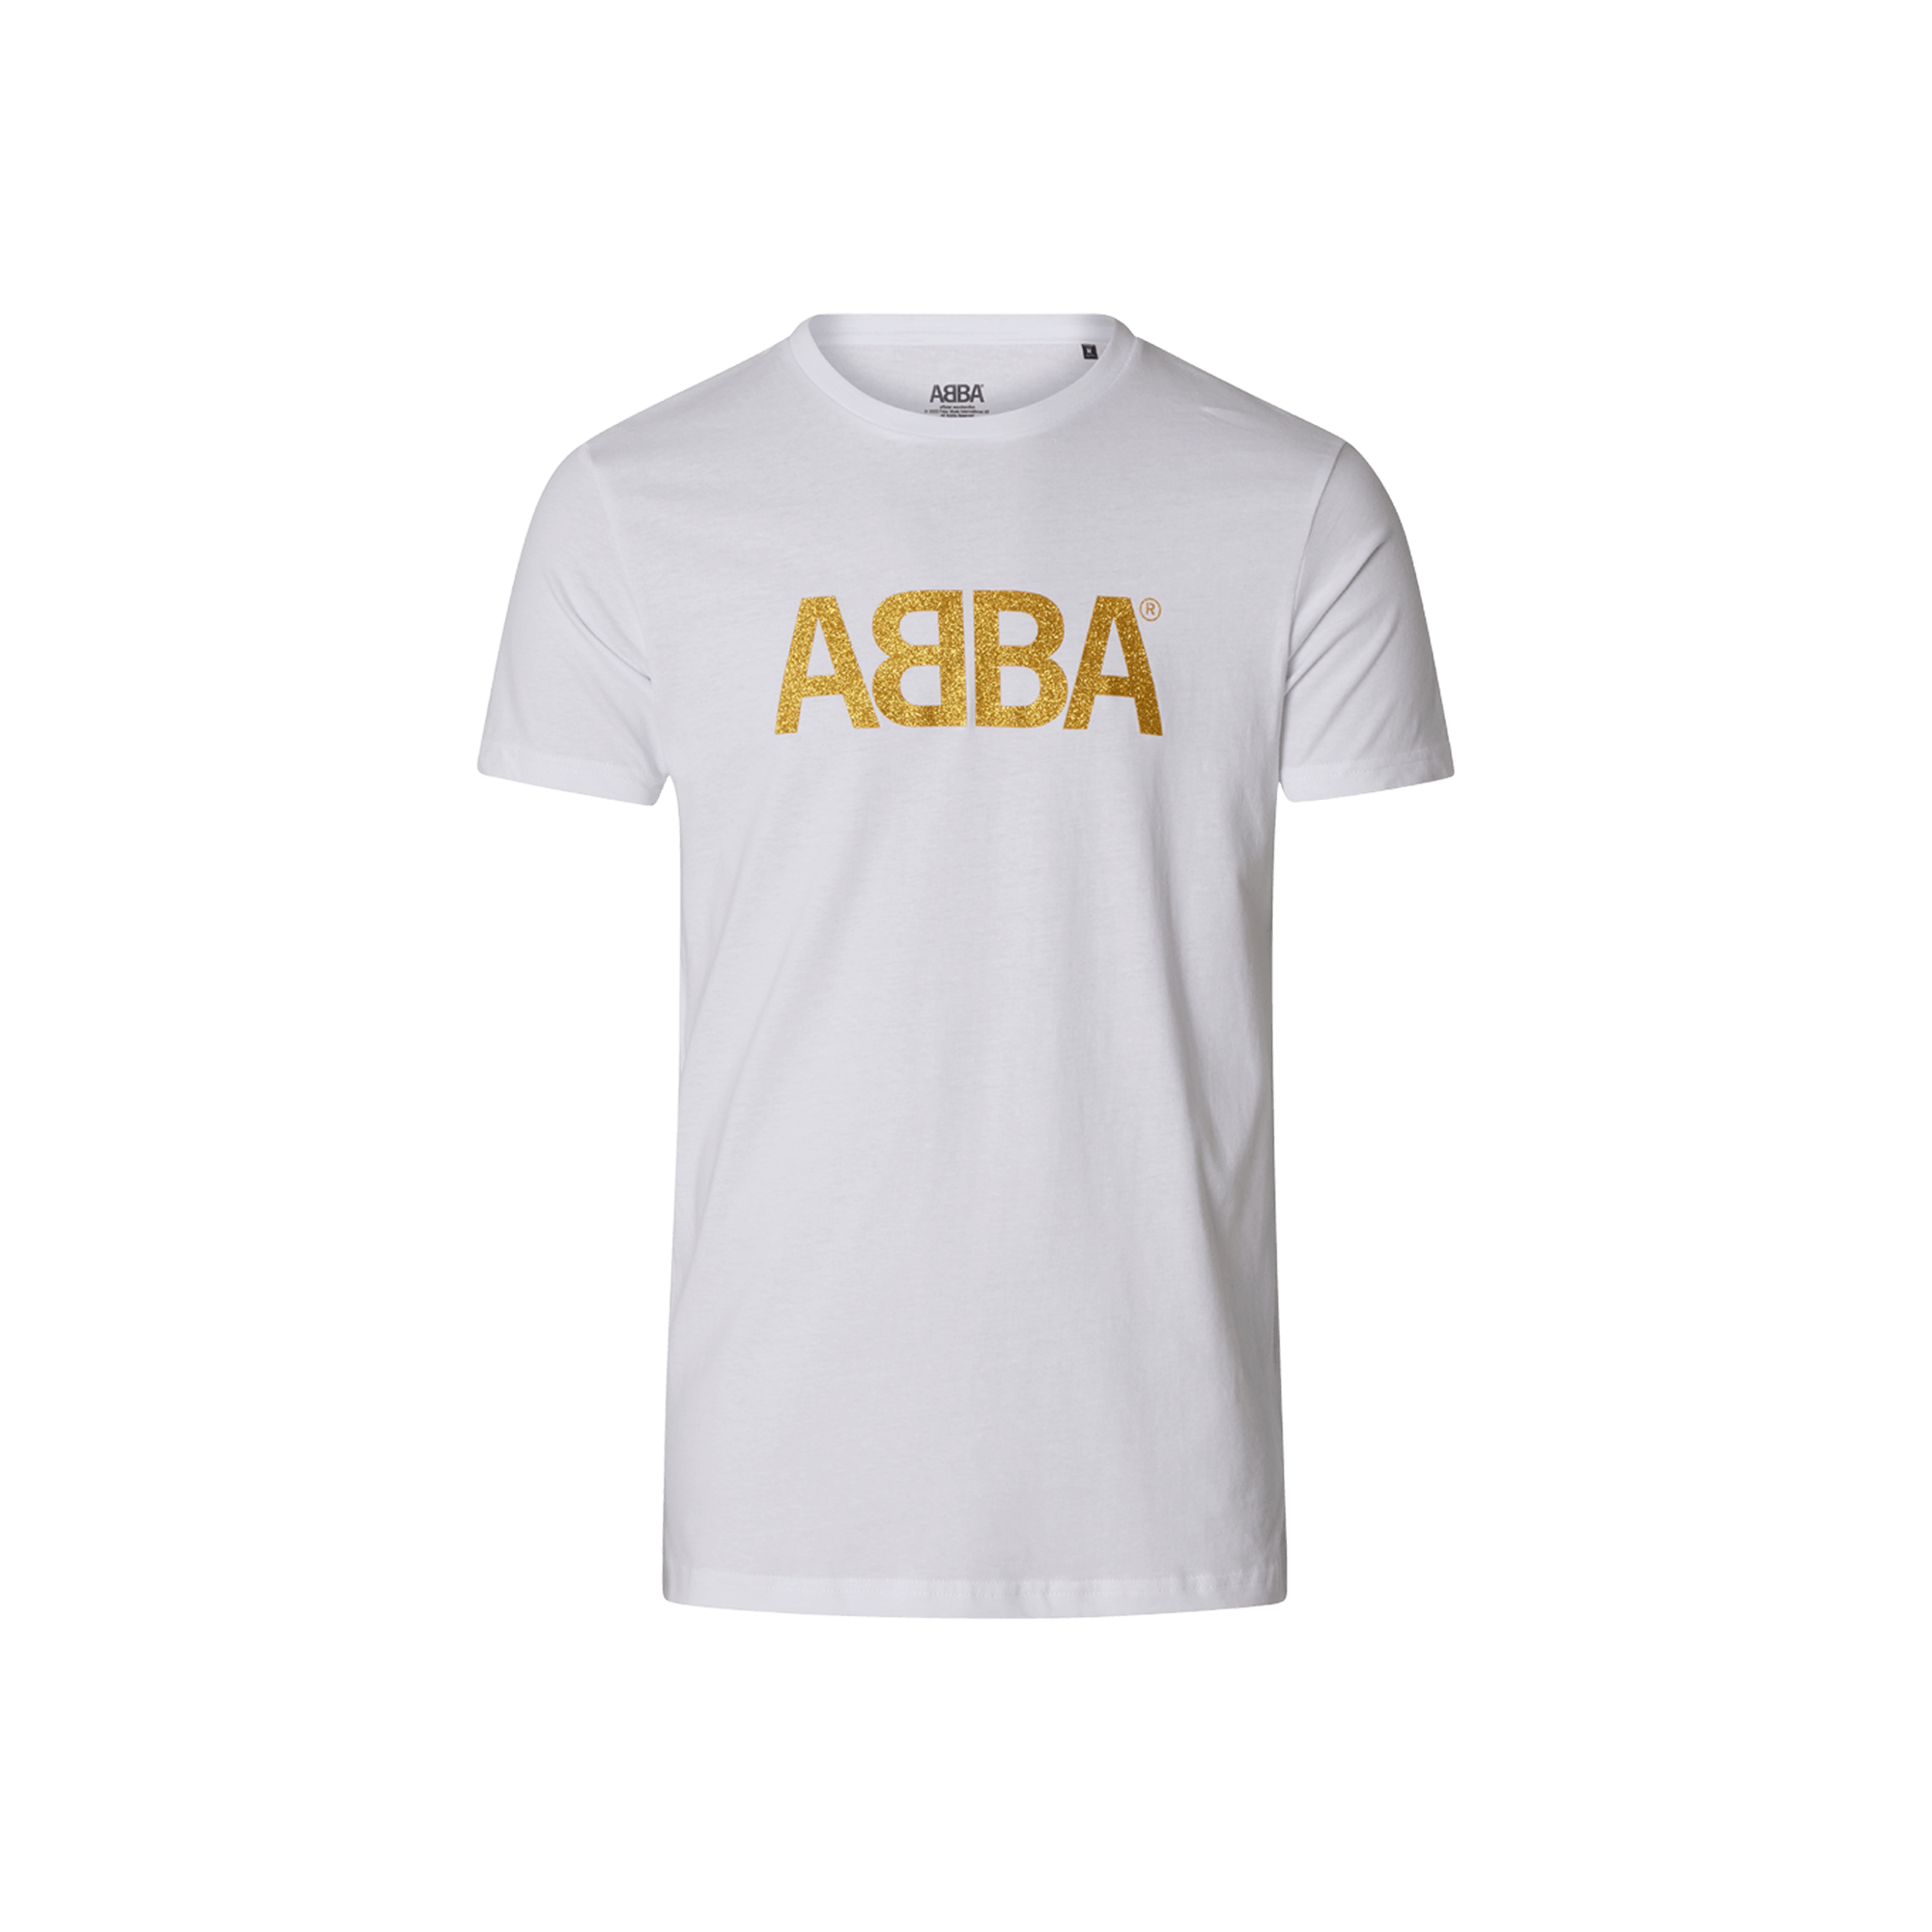 ABBA Gold t-shirt vit